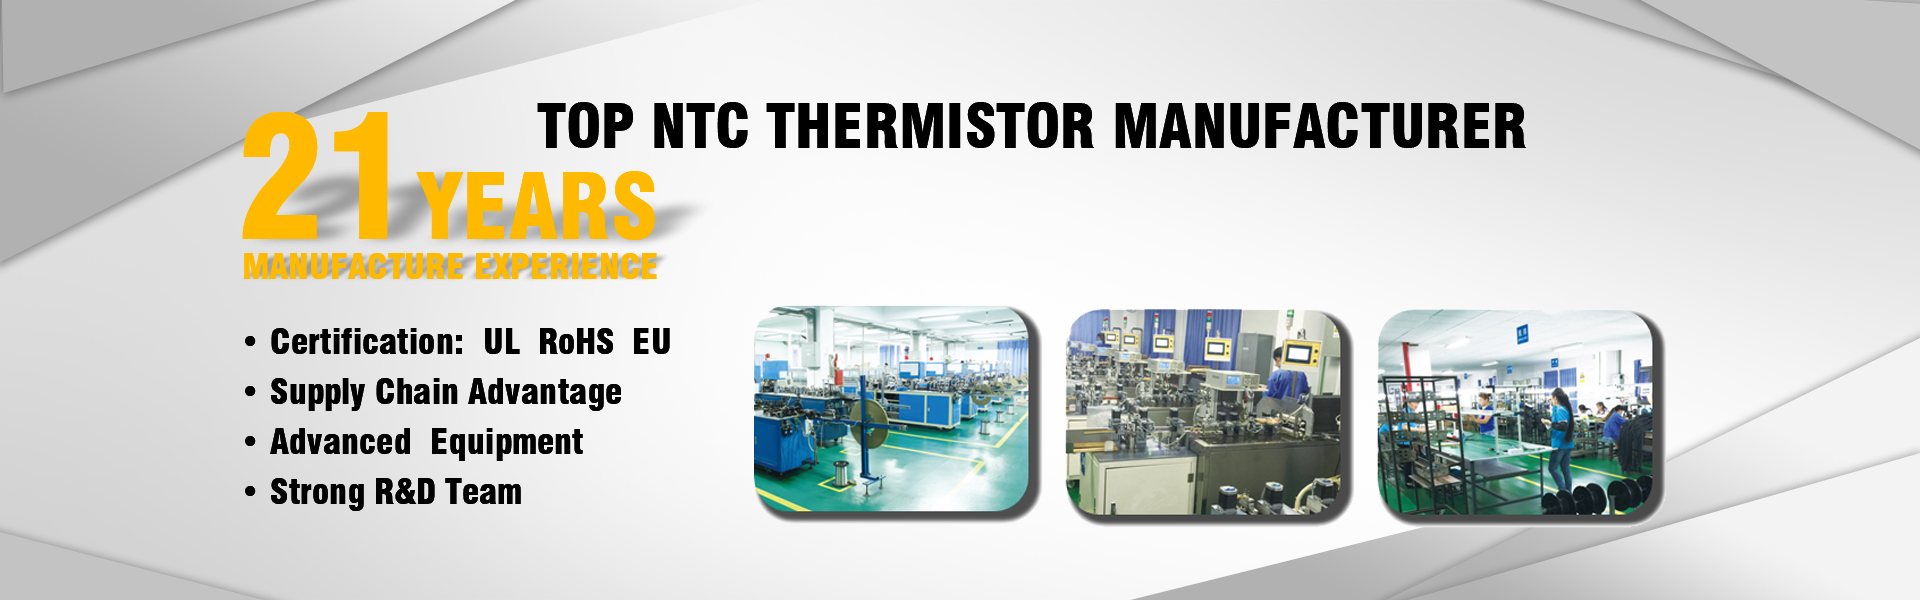 Fabricante de termistores NTC, sensor de temperatura, alta precisión,GUANGDONG XINSHIHENG TECHNOLOGY CO.,LTD